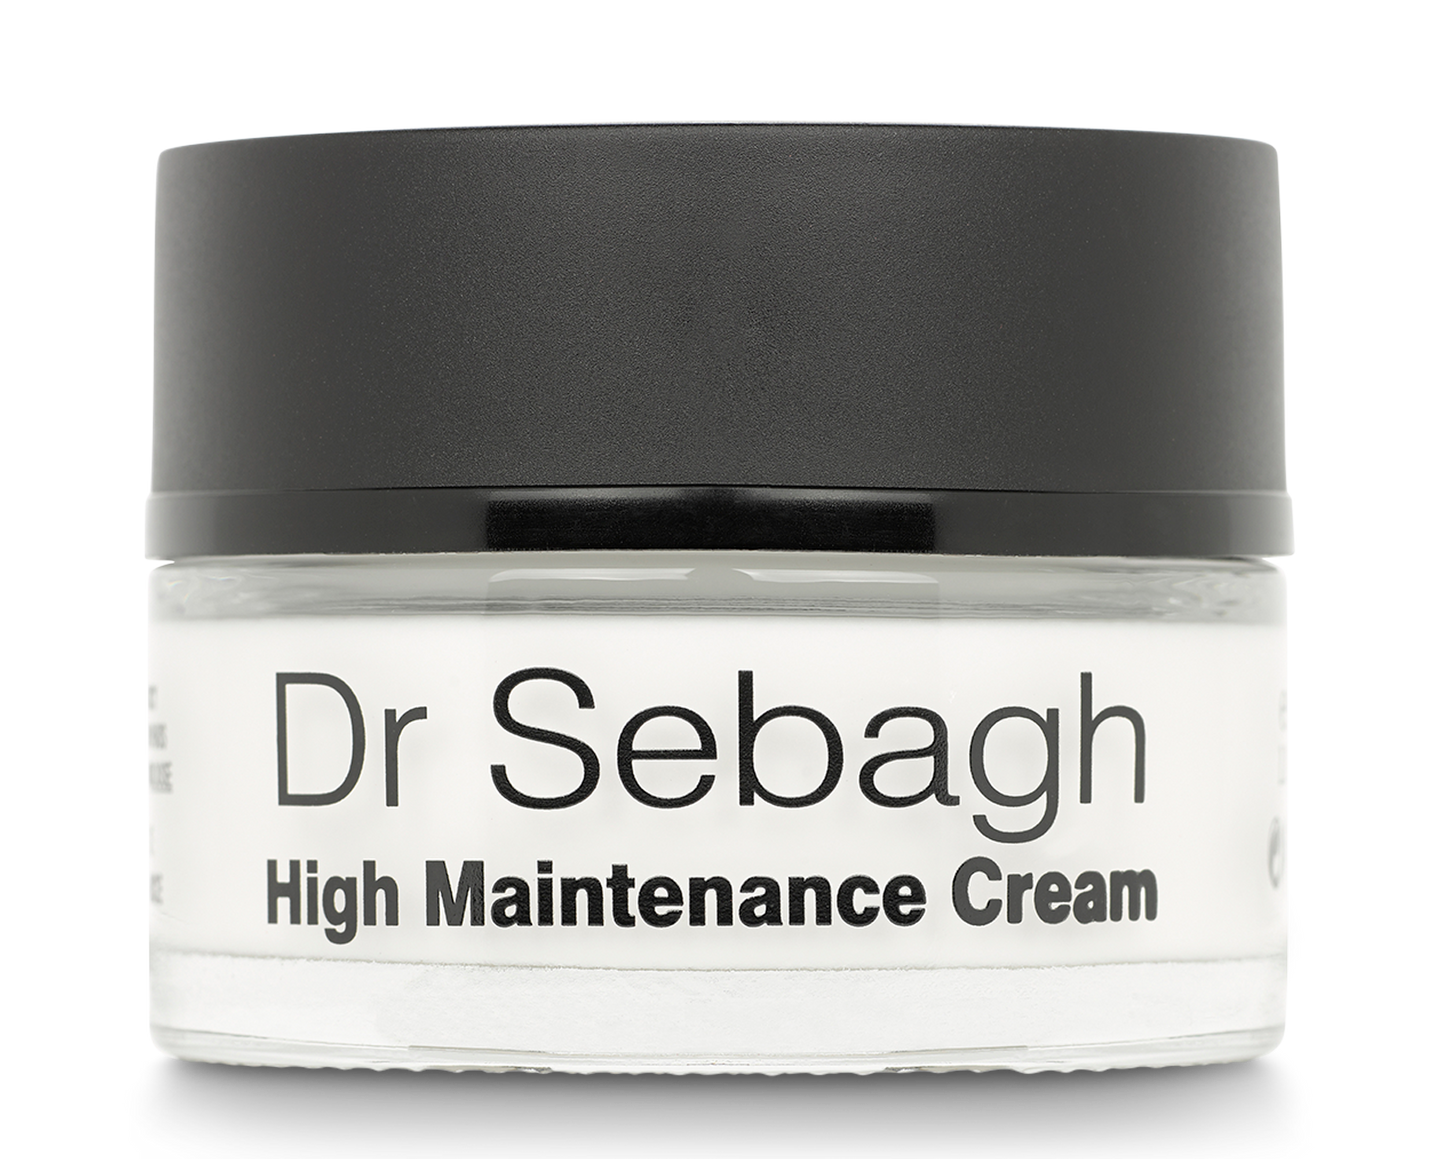 High Maintenance Cream